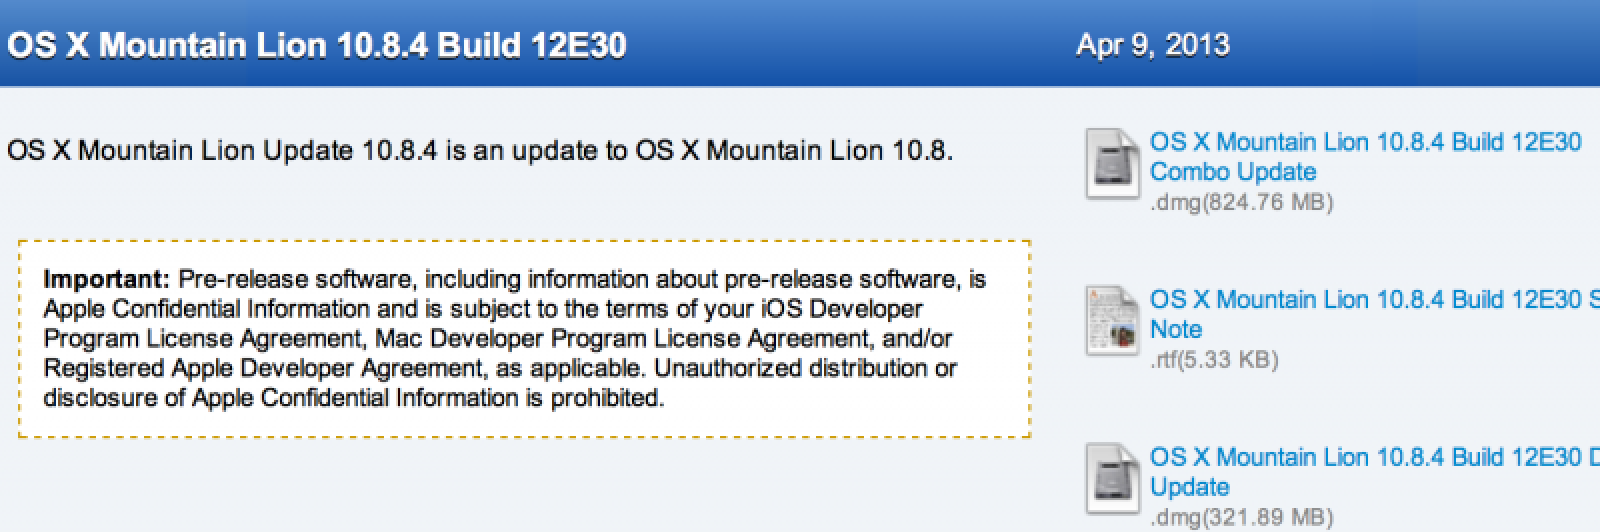 OS X Mountain Lion 10.8.4 Build 12E30 Download